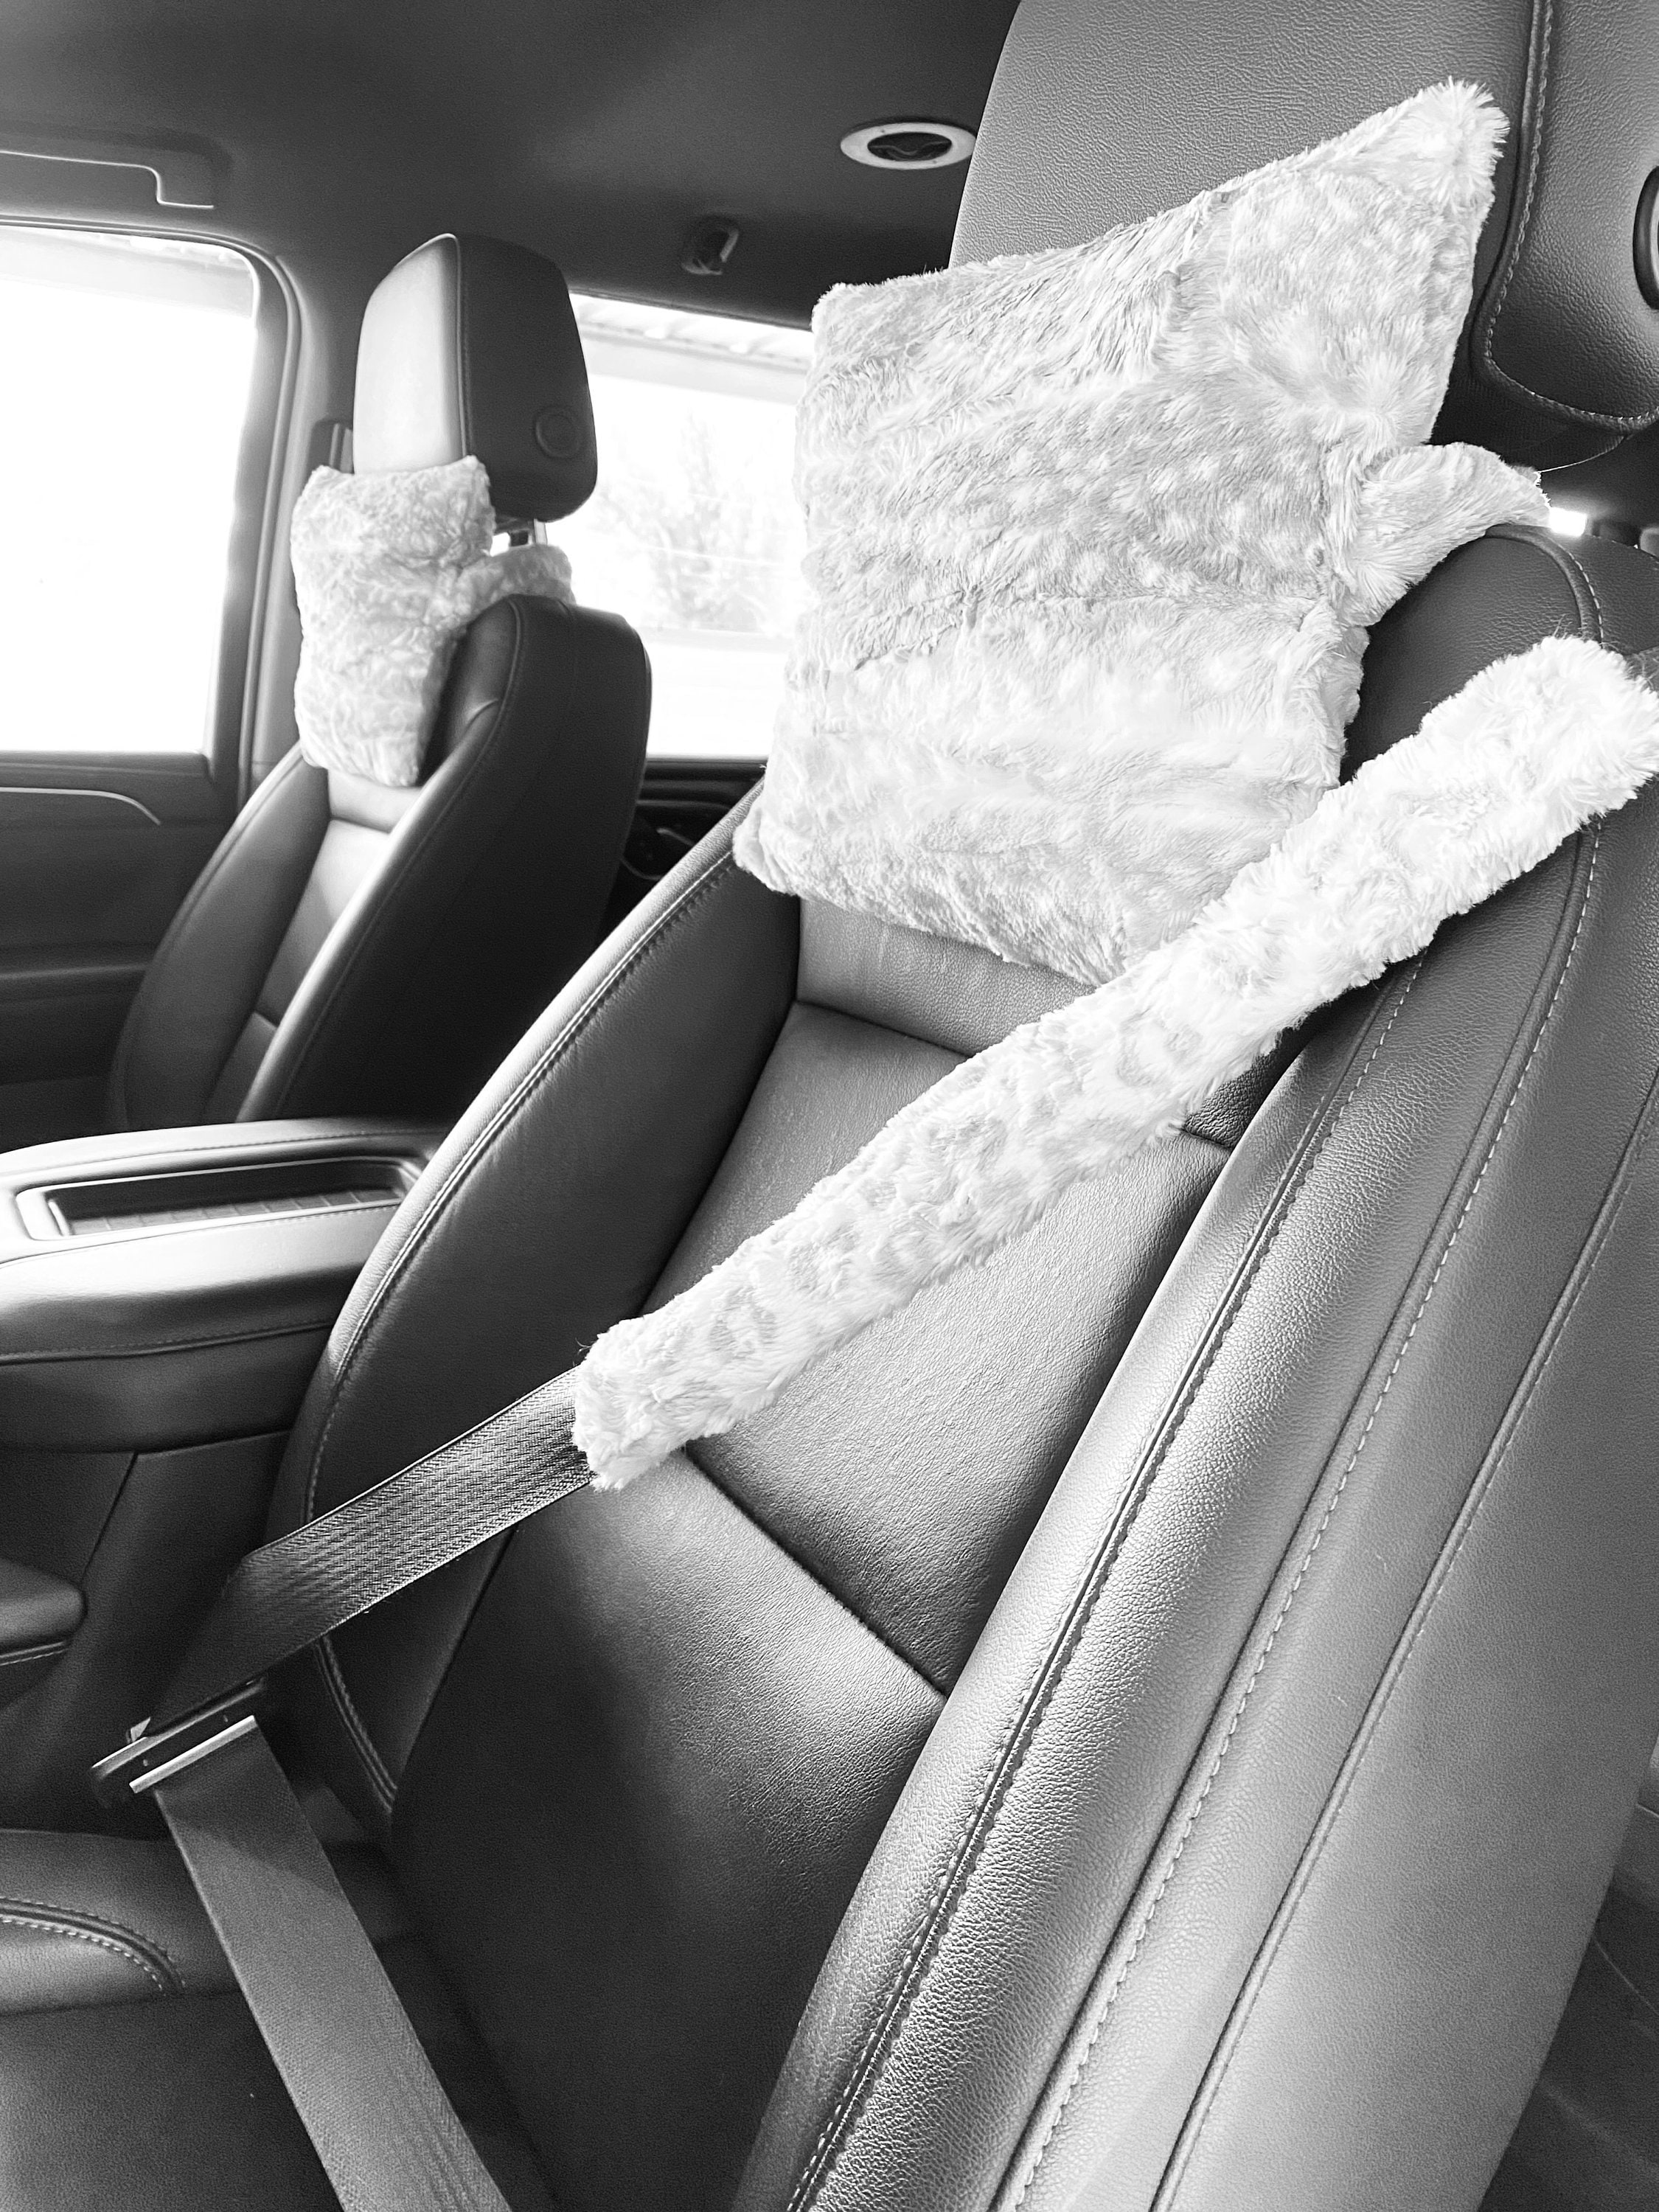 Travel Leather Neck Car Pillow Car Seat Headrest Cushion Driving Pillow  Wbb12862 - China Car Neck Pillow for Driving, Car Neck Pillow Cute